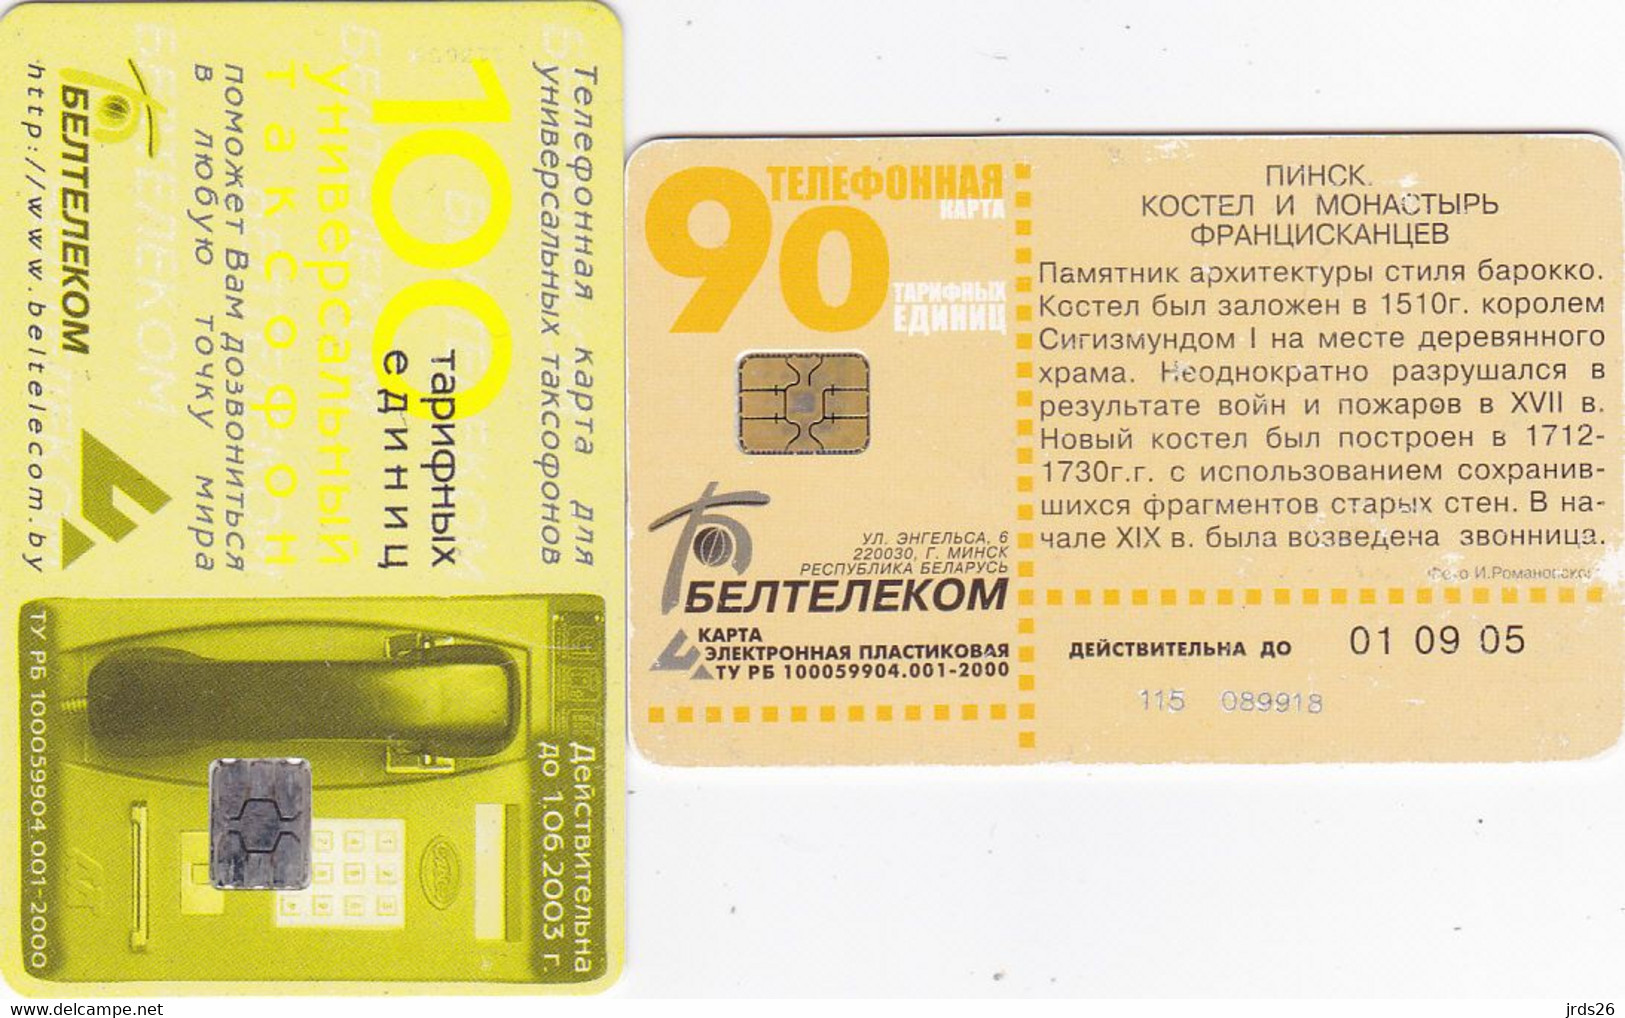 Belarus 2 Phonecards Chip- - - Church - Belarus